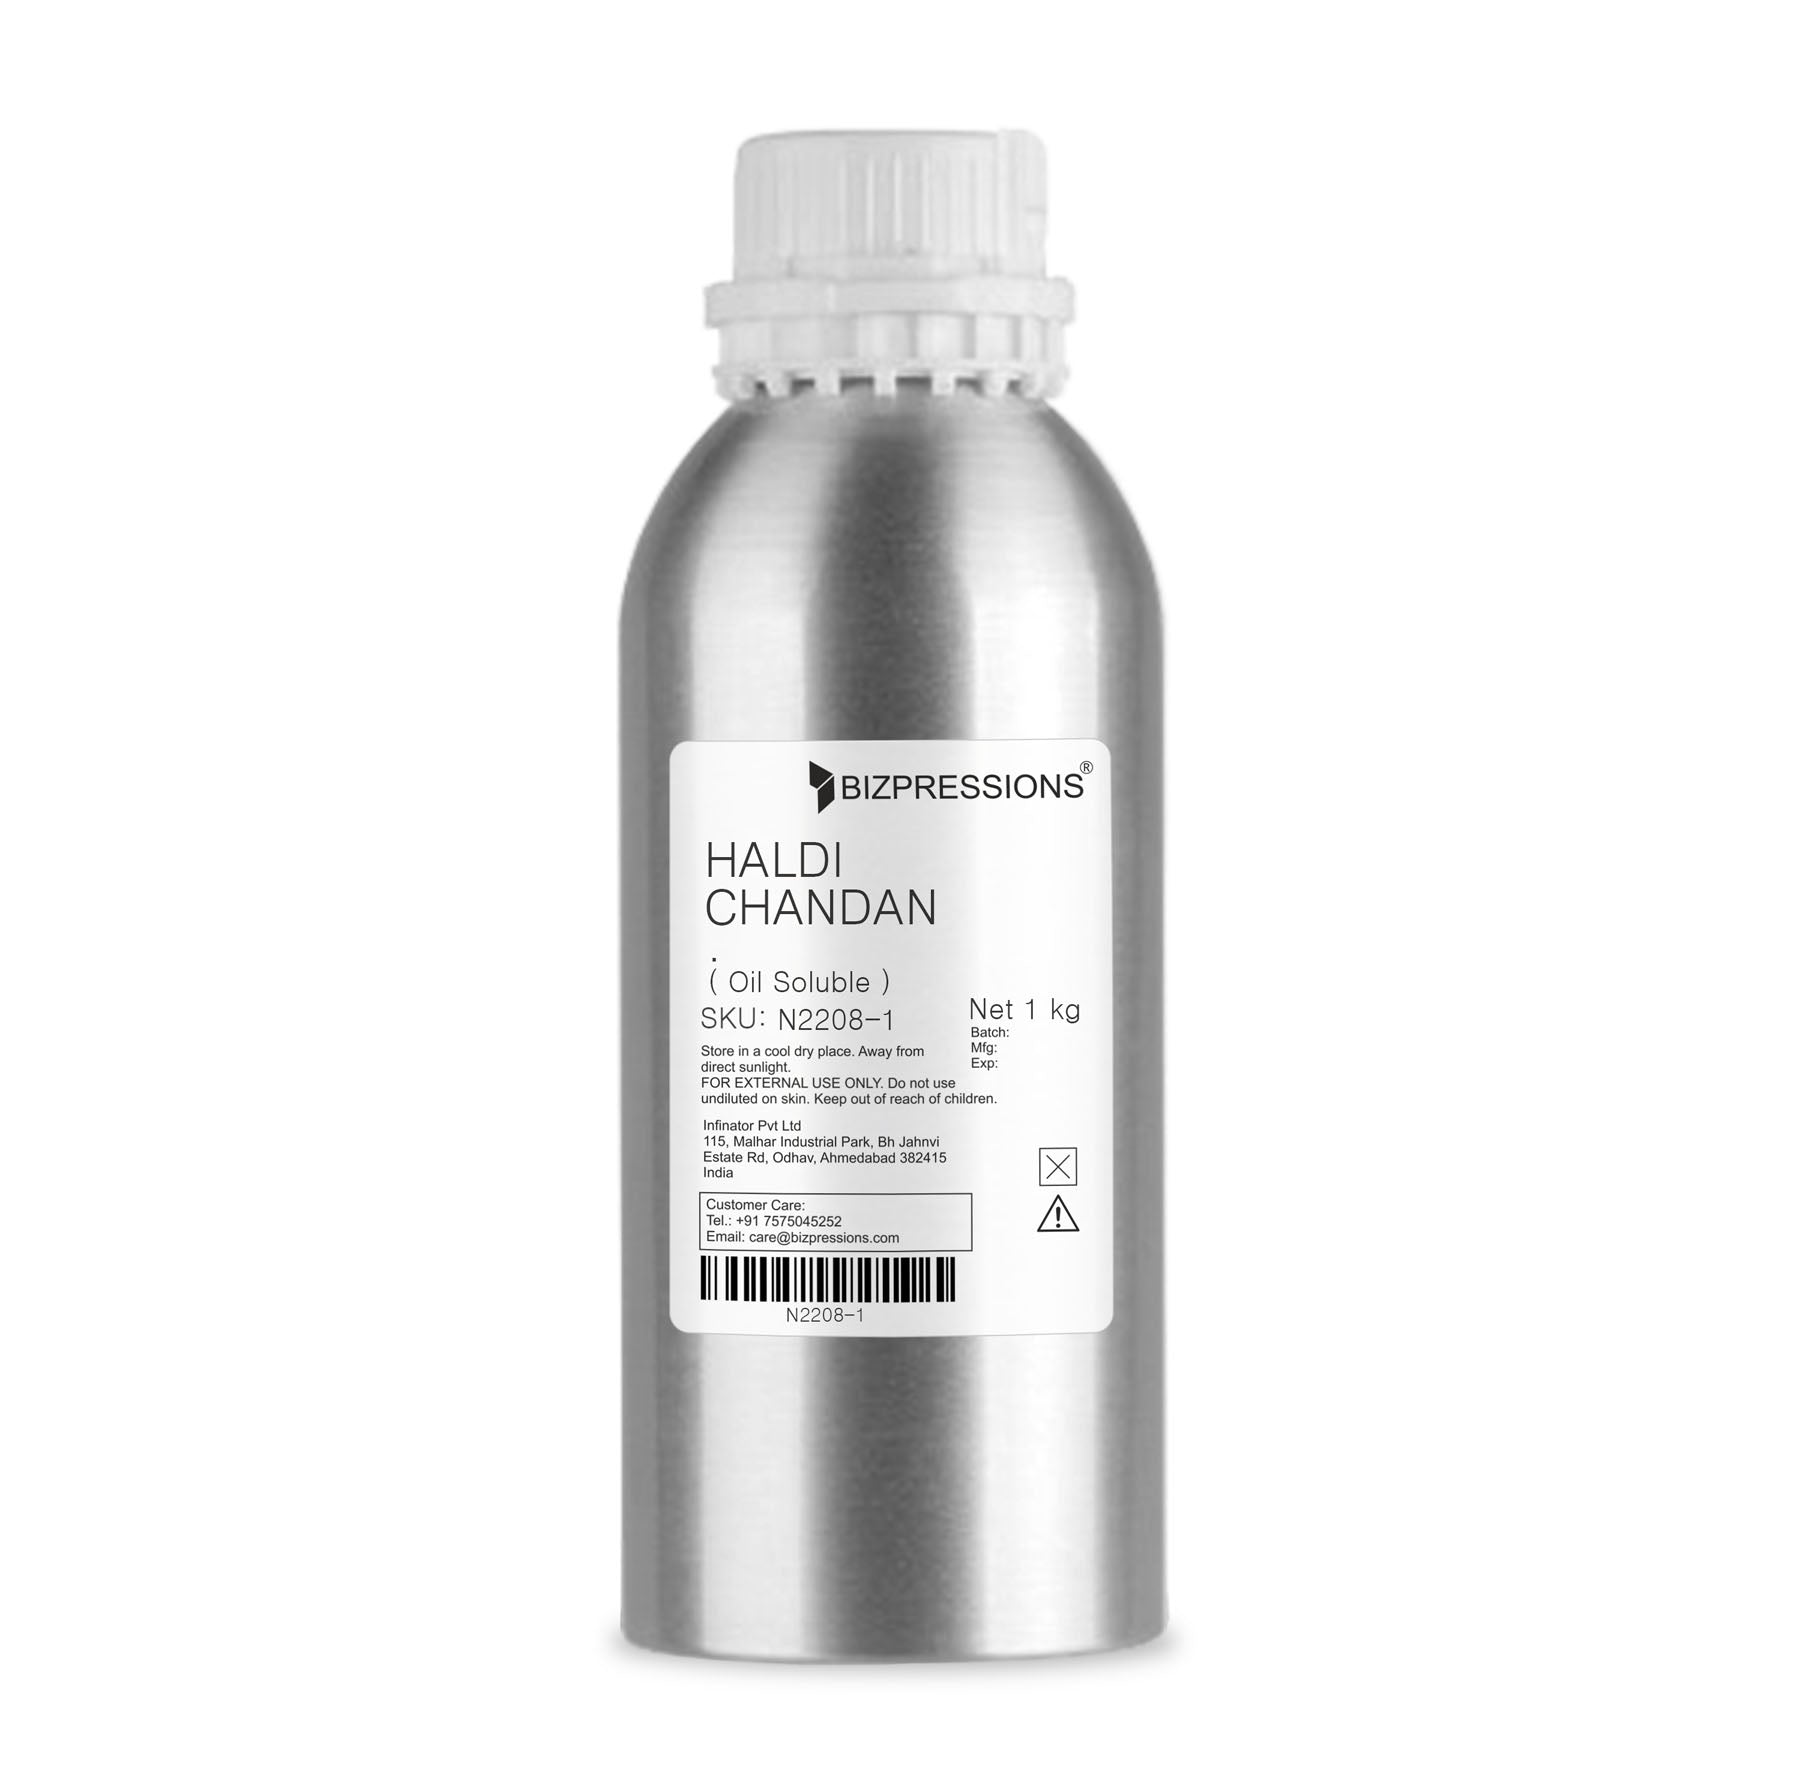 HALDI CHANDAN - Fragrance ( Oil Soluble ) - 1 kg